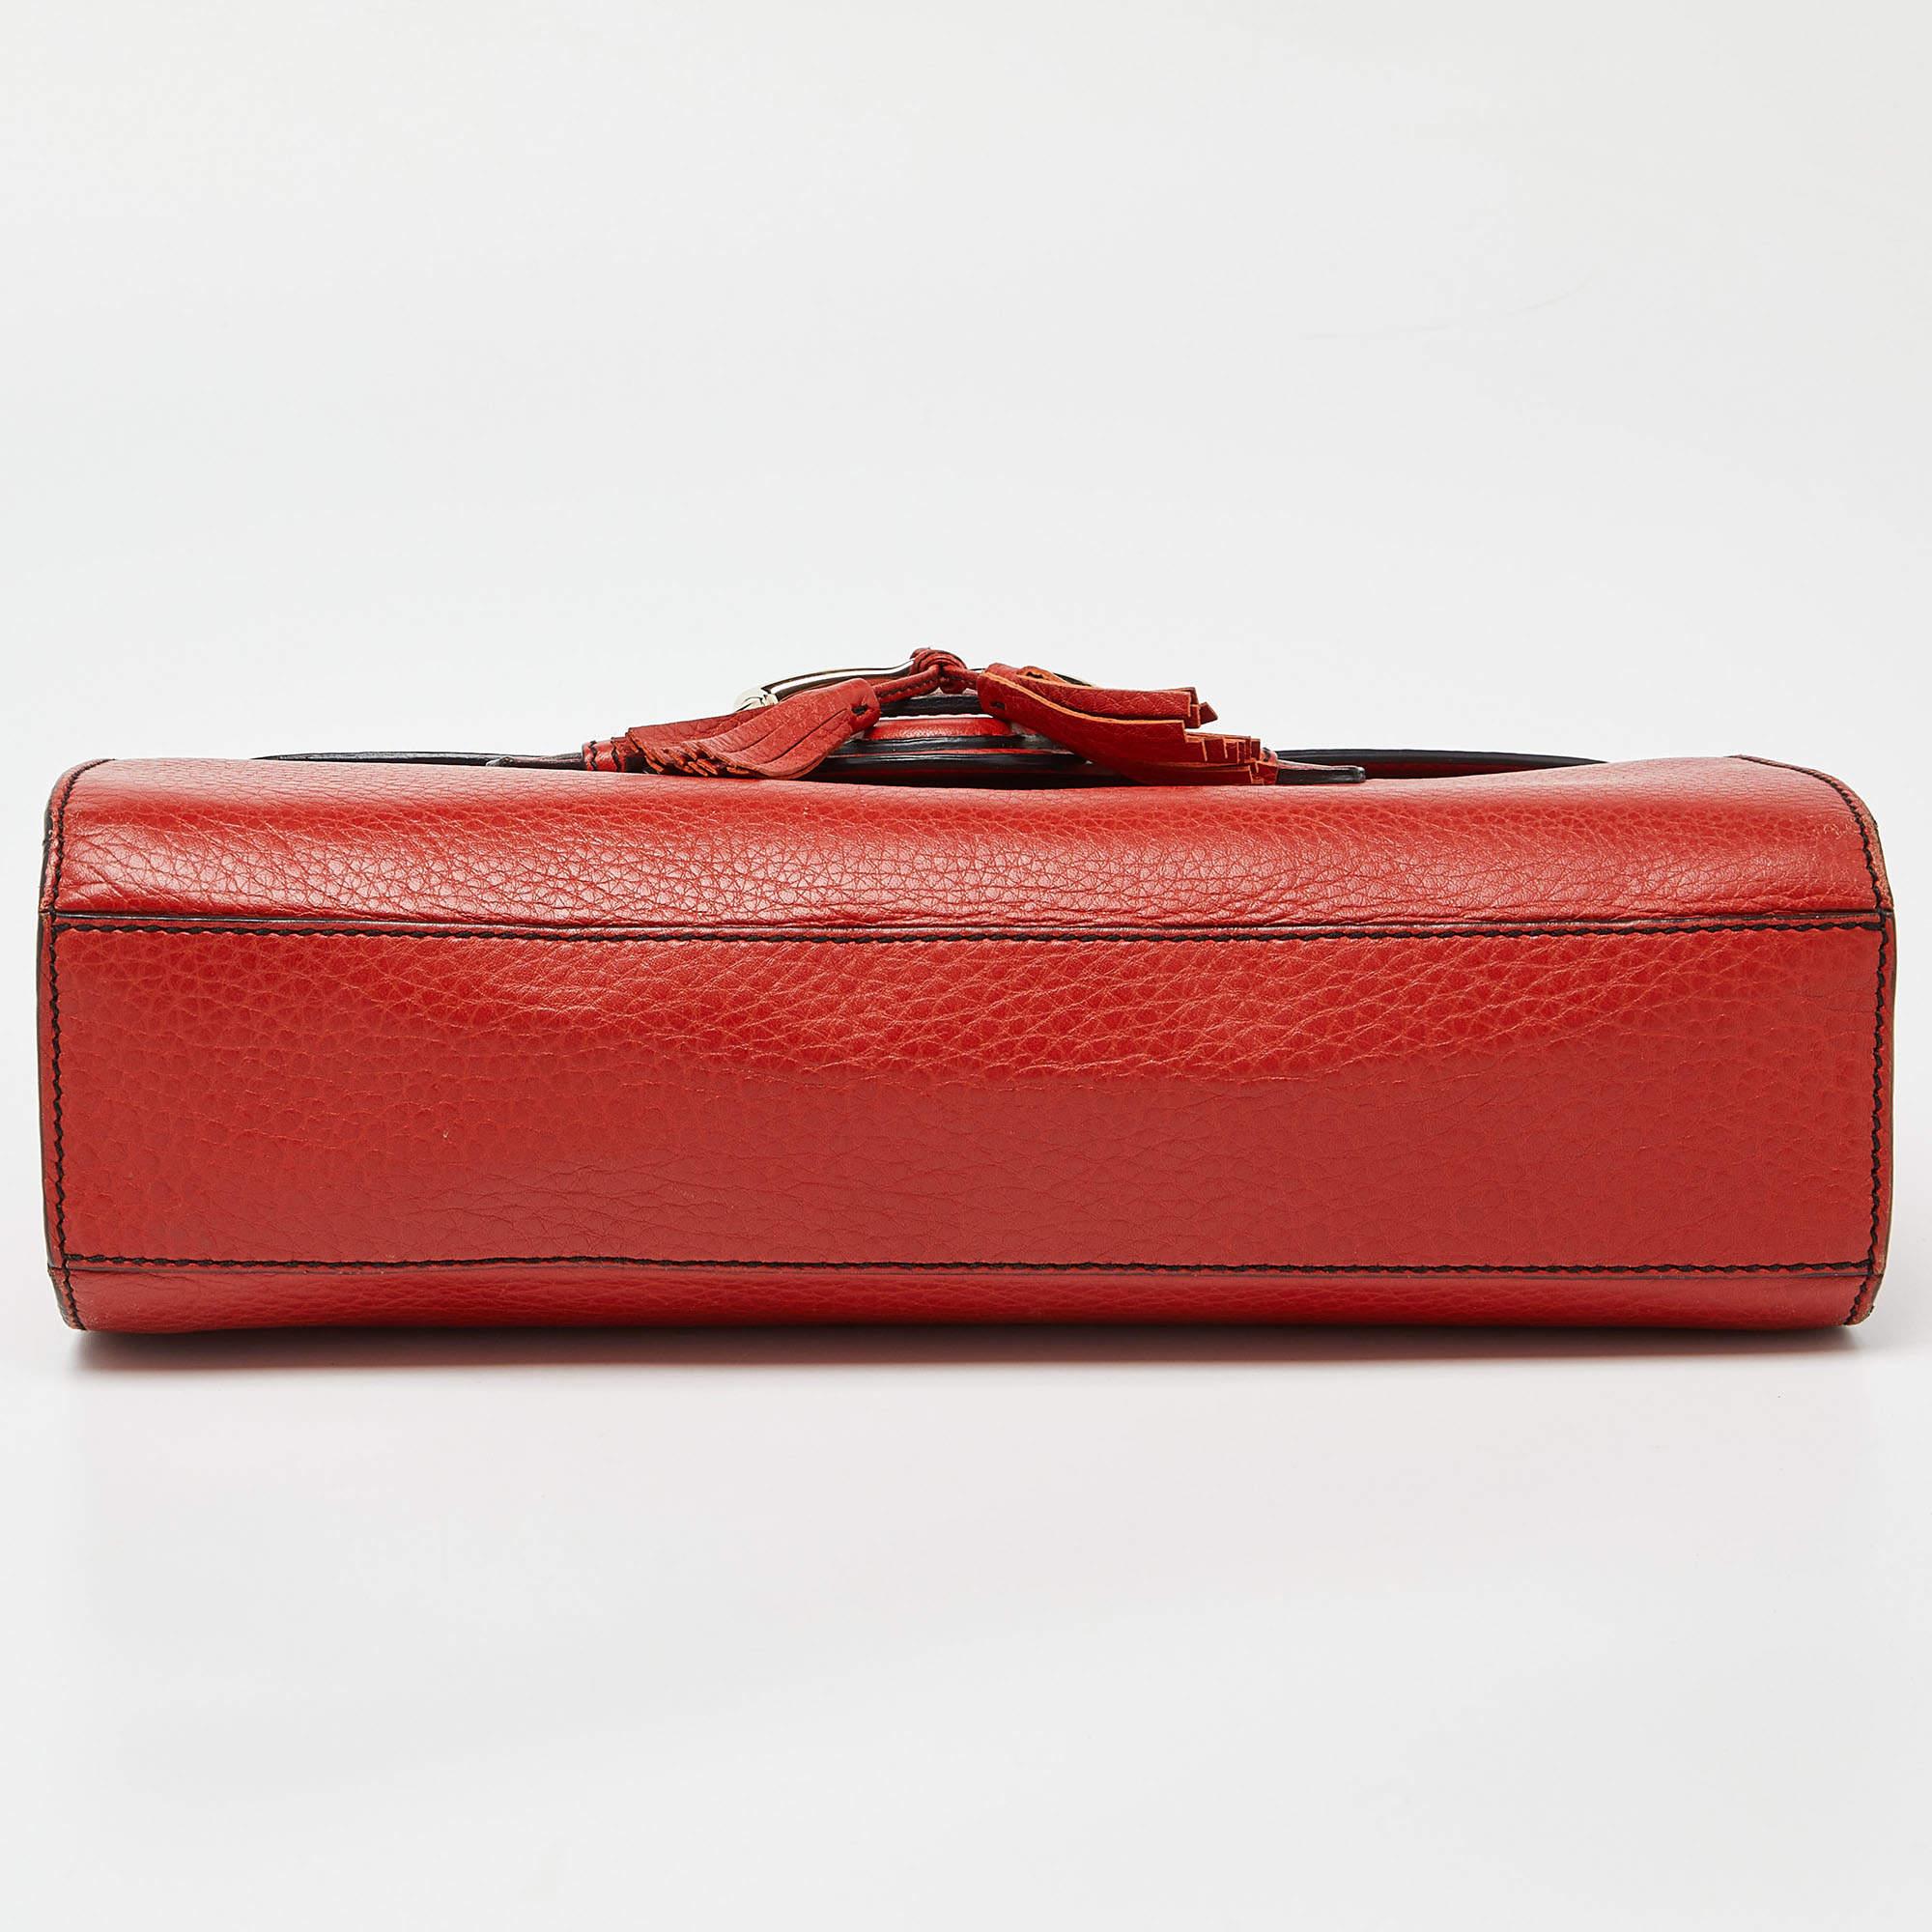 Gucci Coral Red Leather Medium Emily Shoulder Bag 8